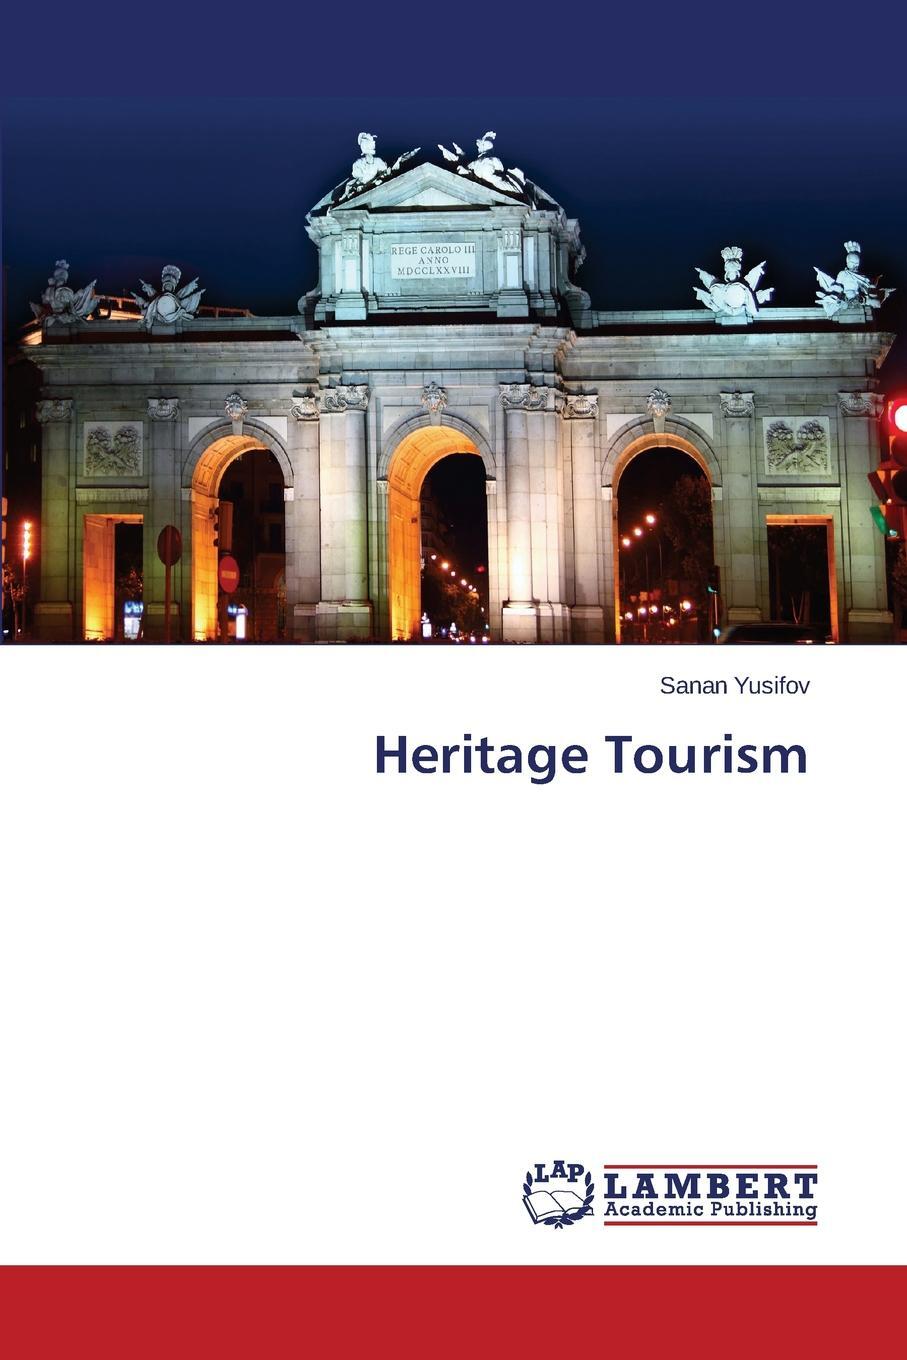 Heritage tourism. Cultural Heritage Tourism.